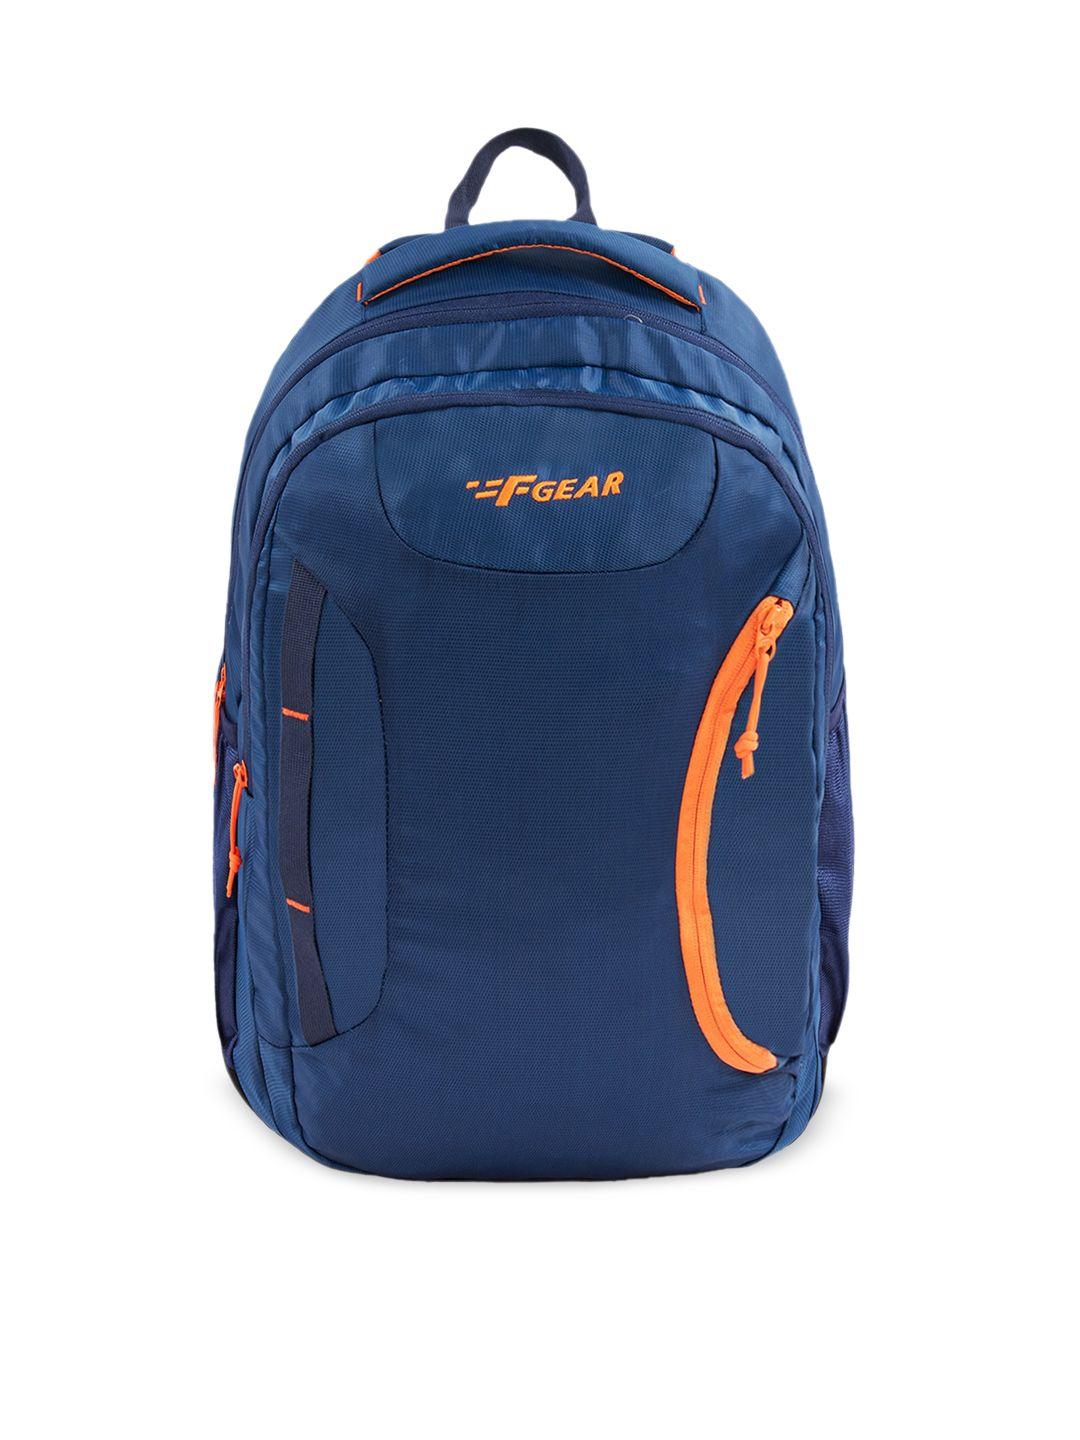 f gear unisex navy blue & orange backpack